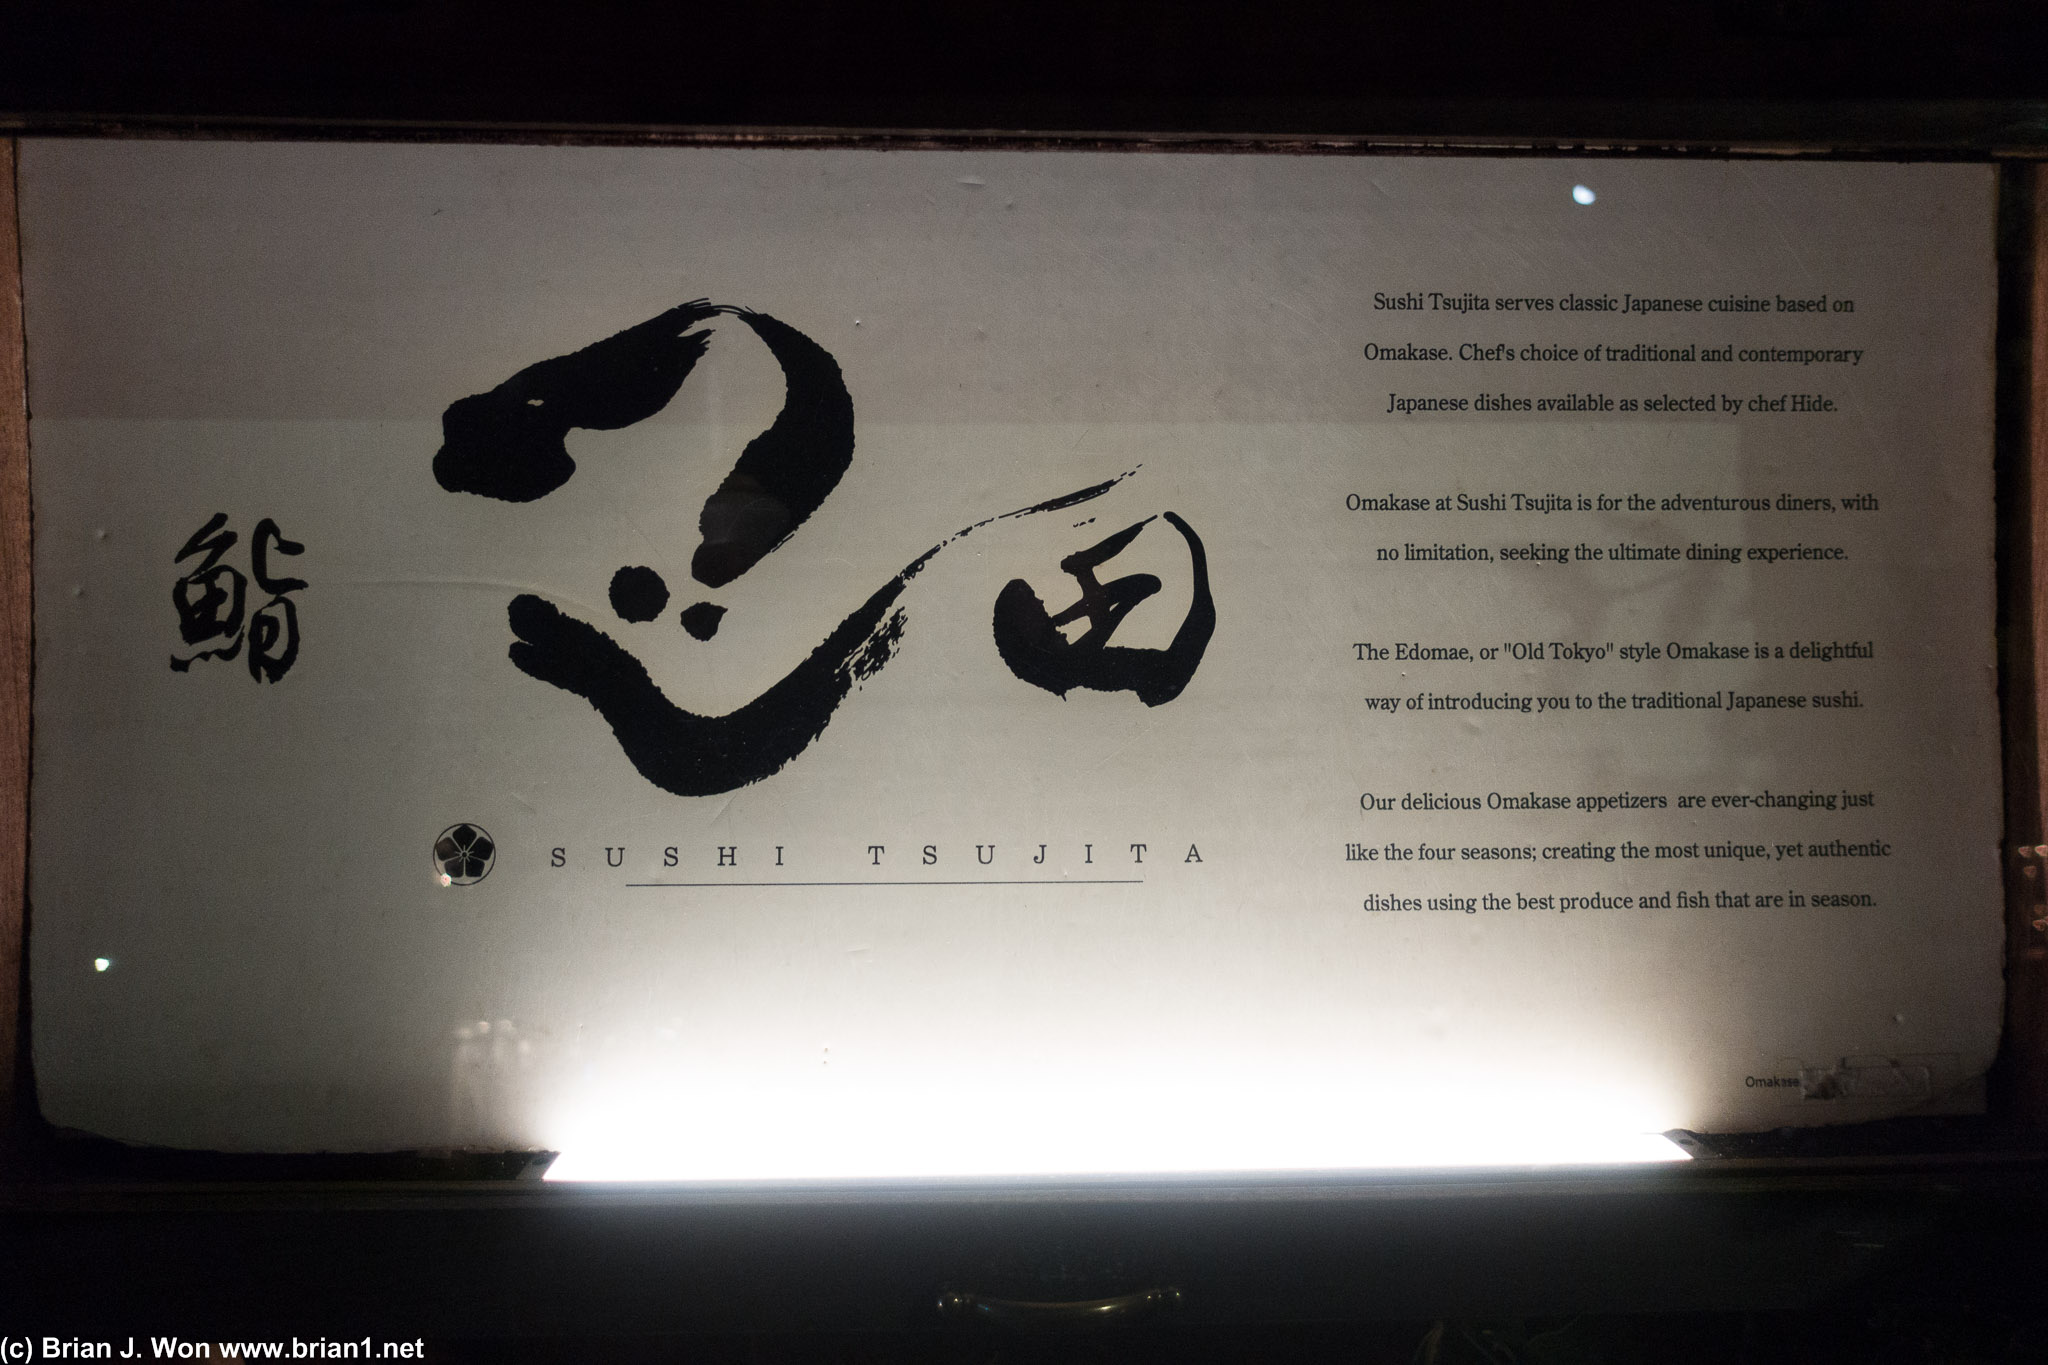 And the sign for Sushi Tsujita.